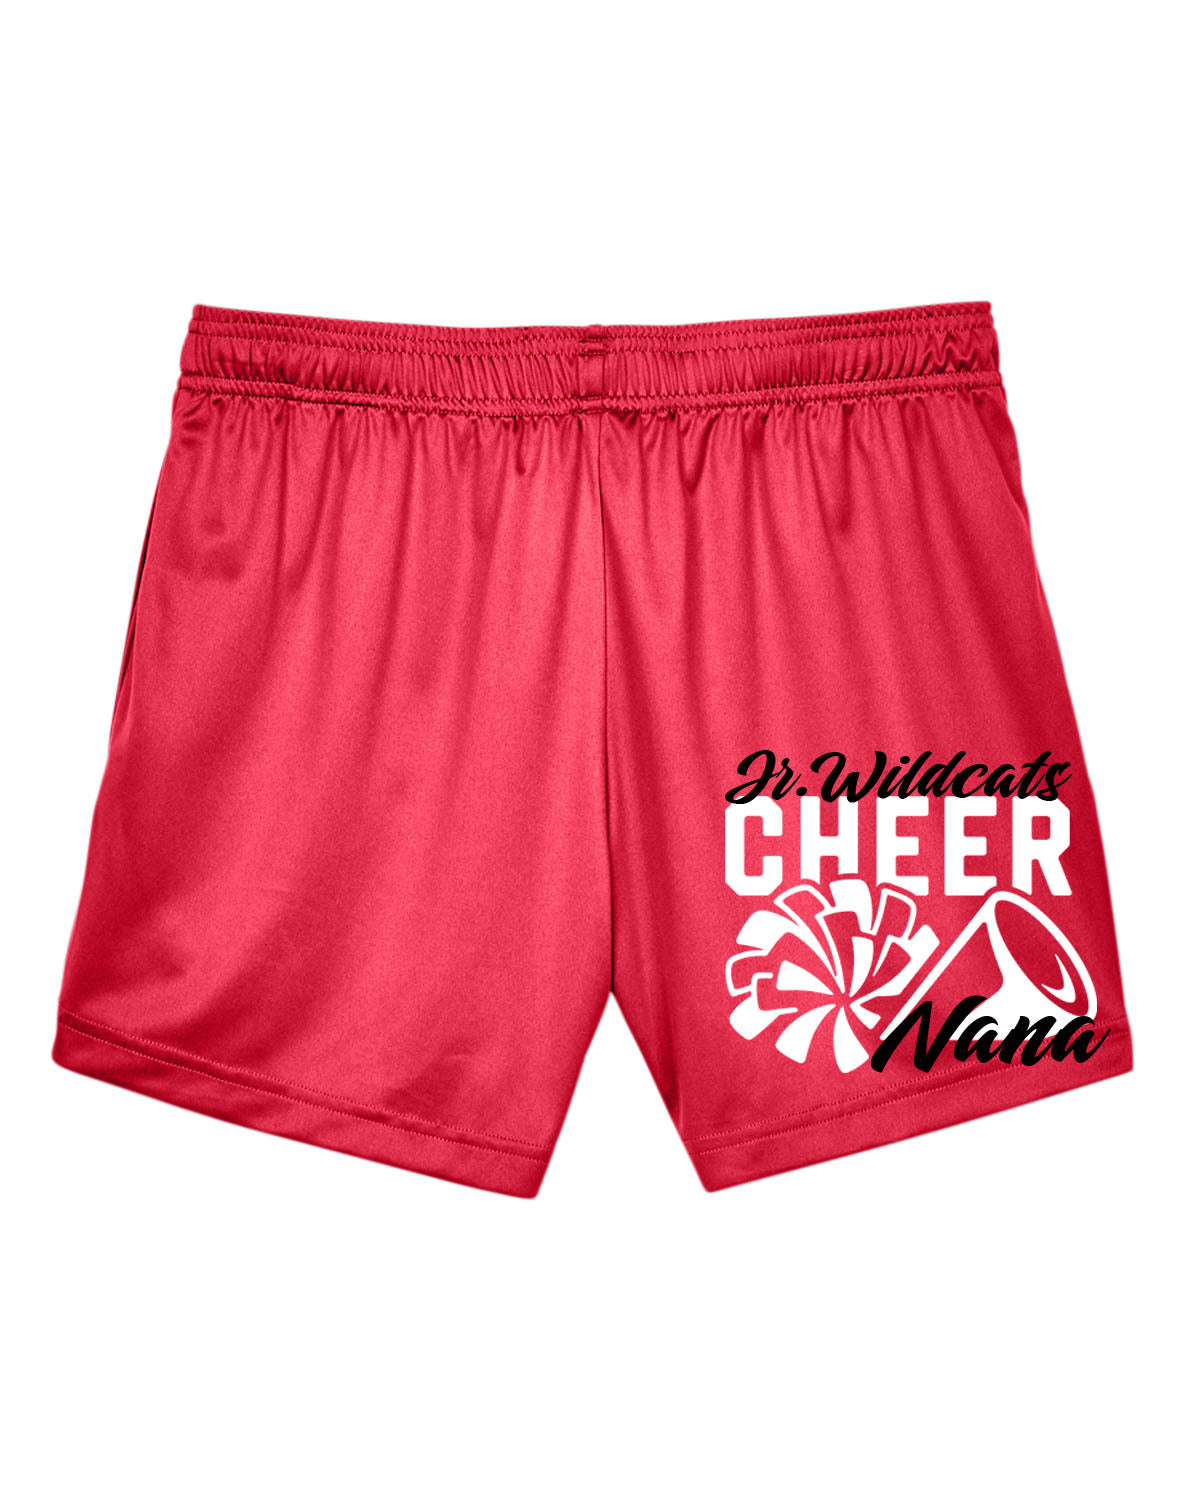 High Point Cheer Ladies Performance Design 4 Shorts